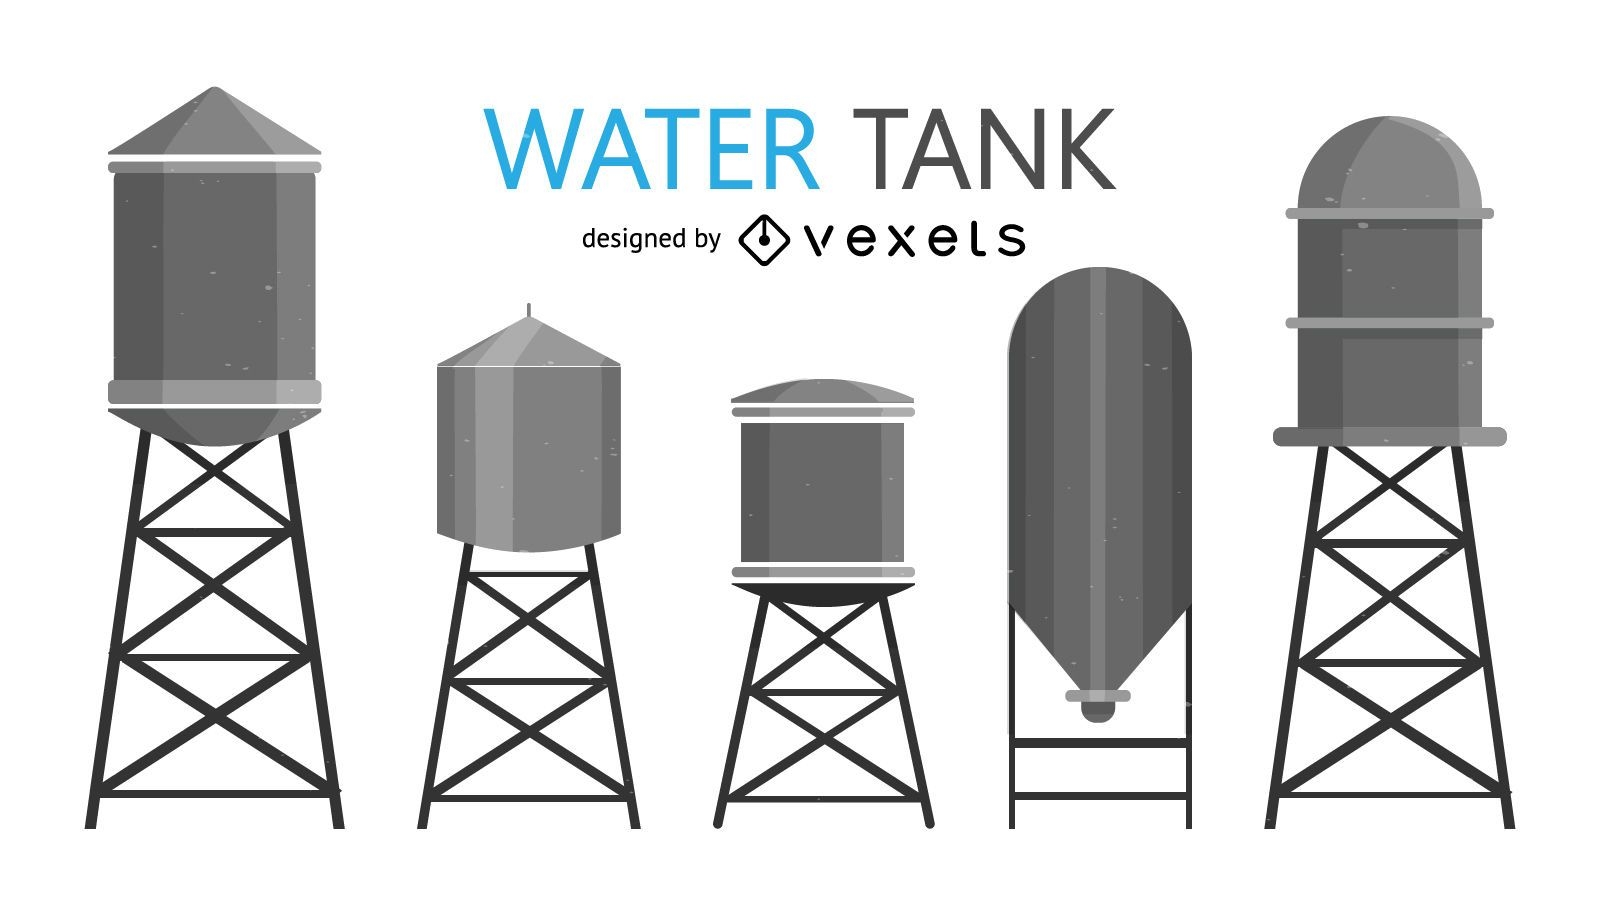 Water tank illustrations